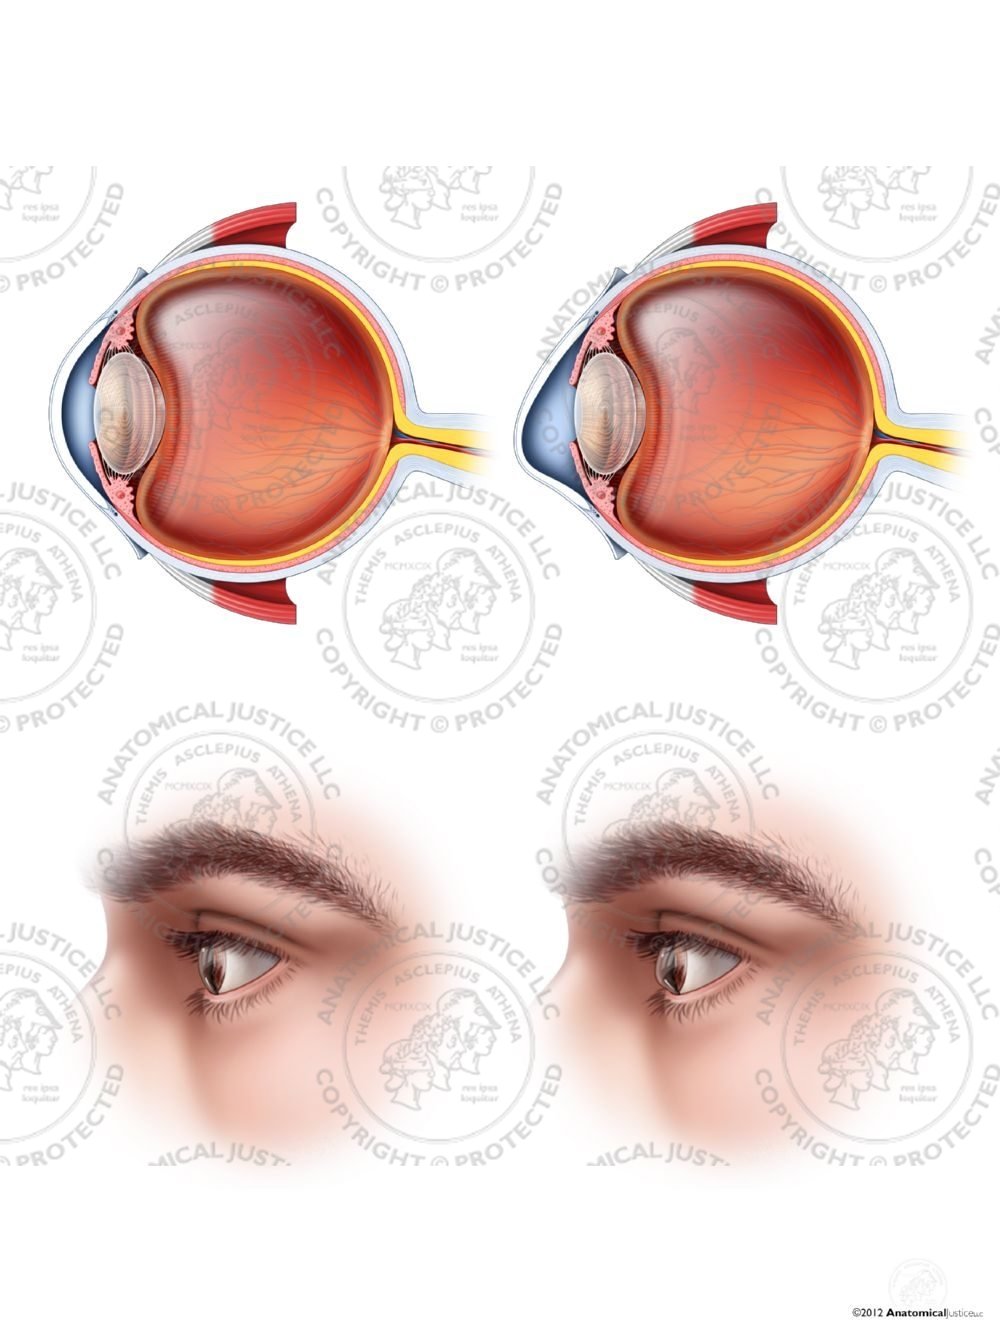 Normal Left Eye vs. Keratoconus – No Text